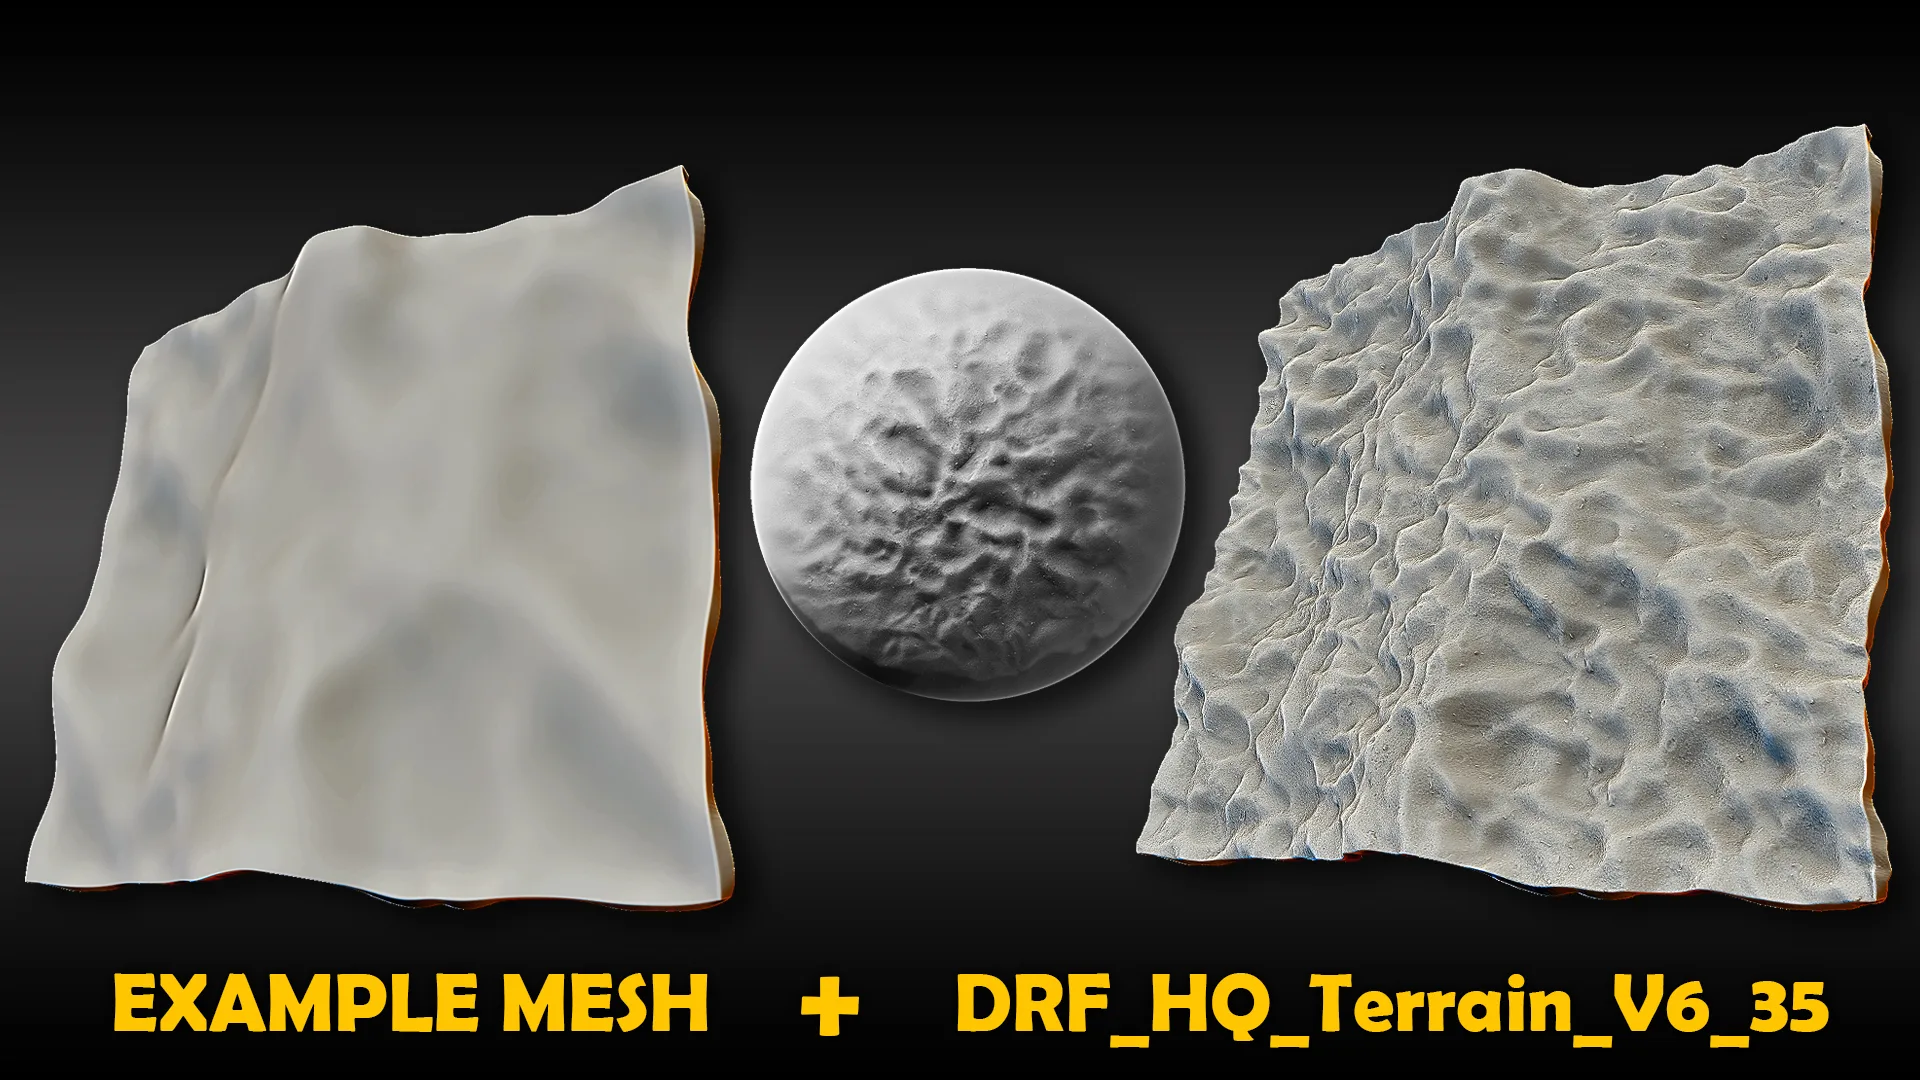 Ultra HQ Seamless Terrain / Rocks Sculpt brushes + Alpha/Height Maps Set Vol.6